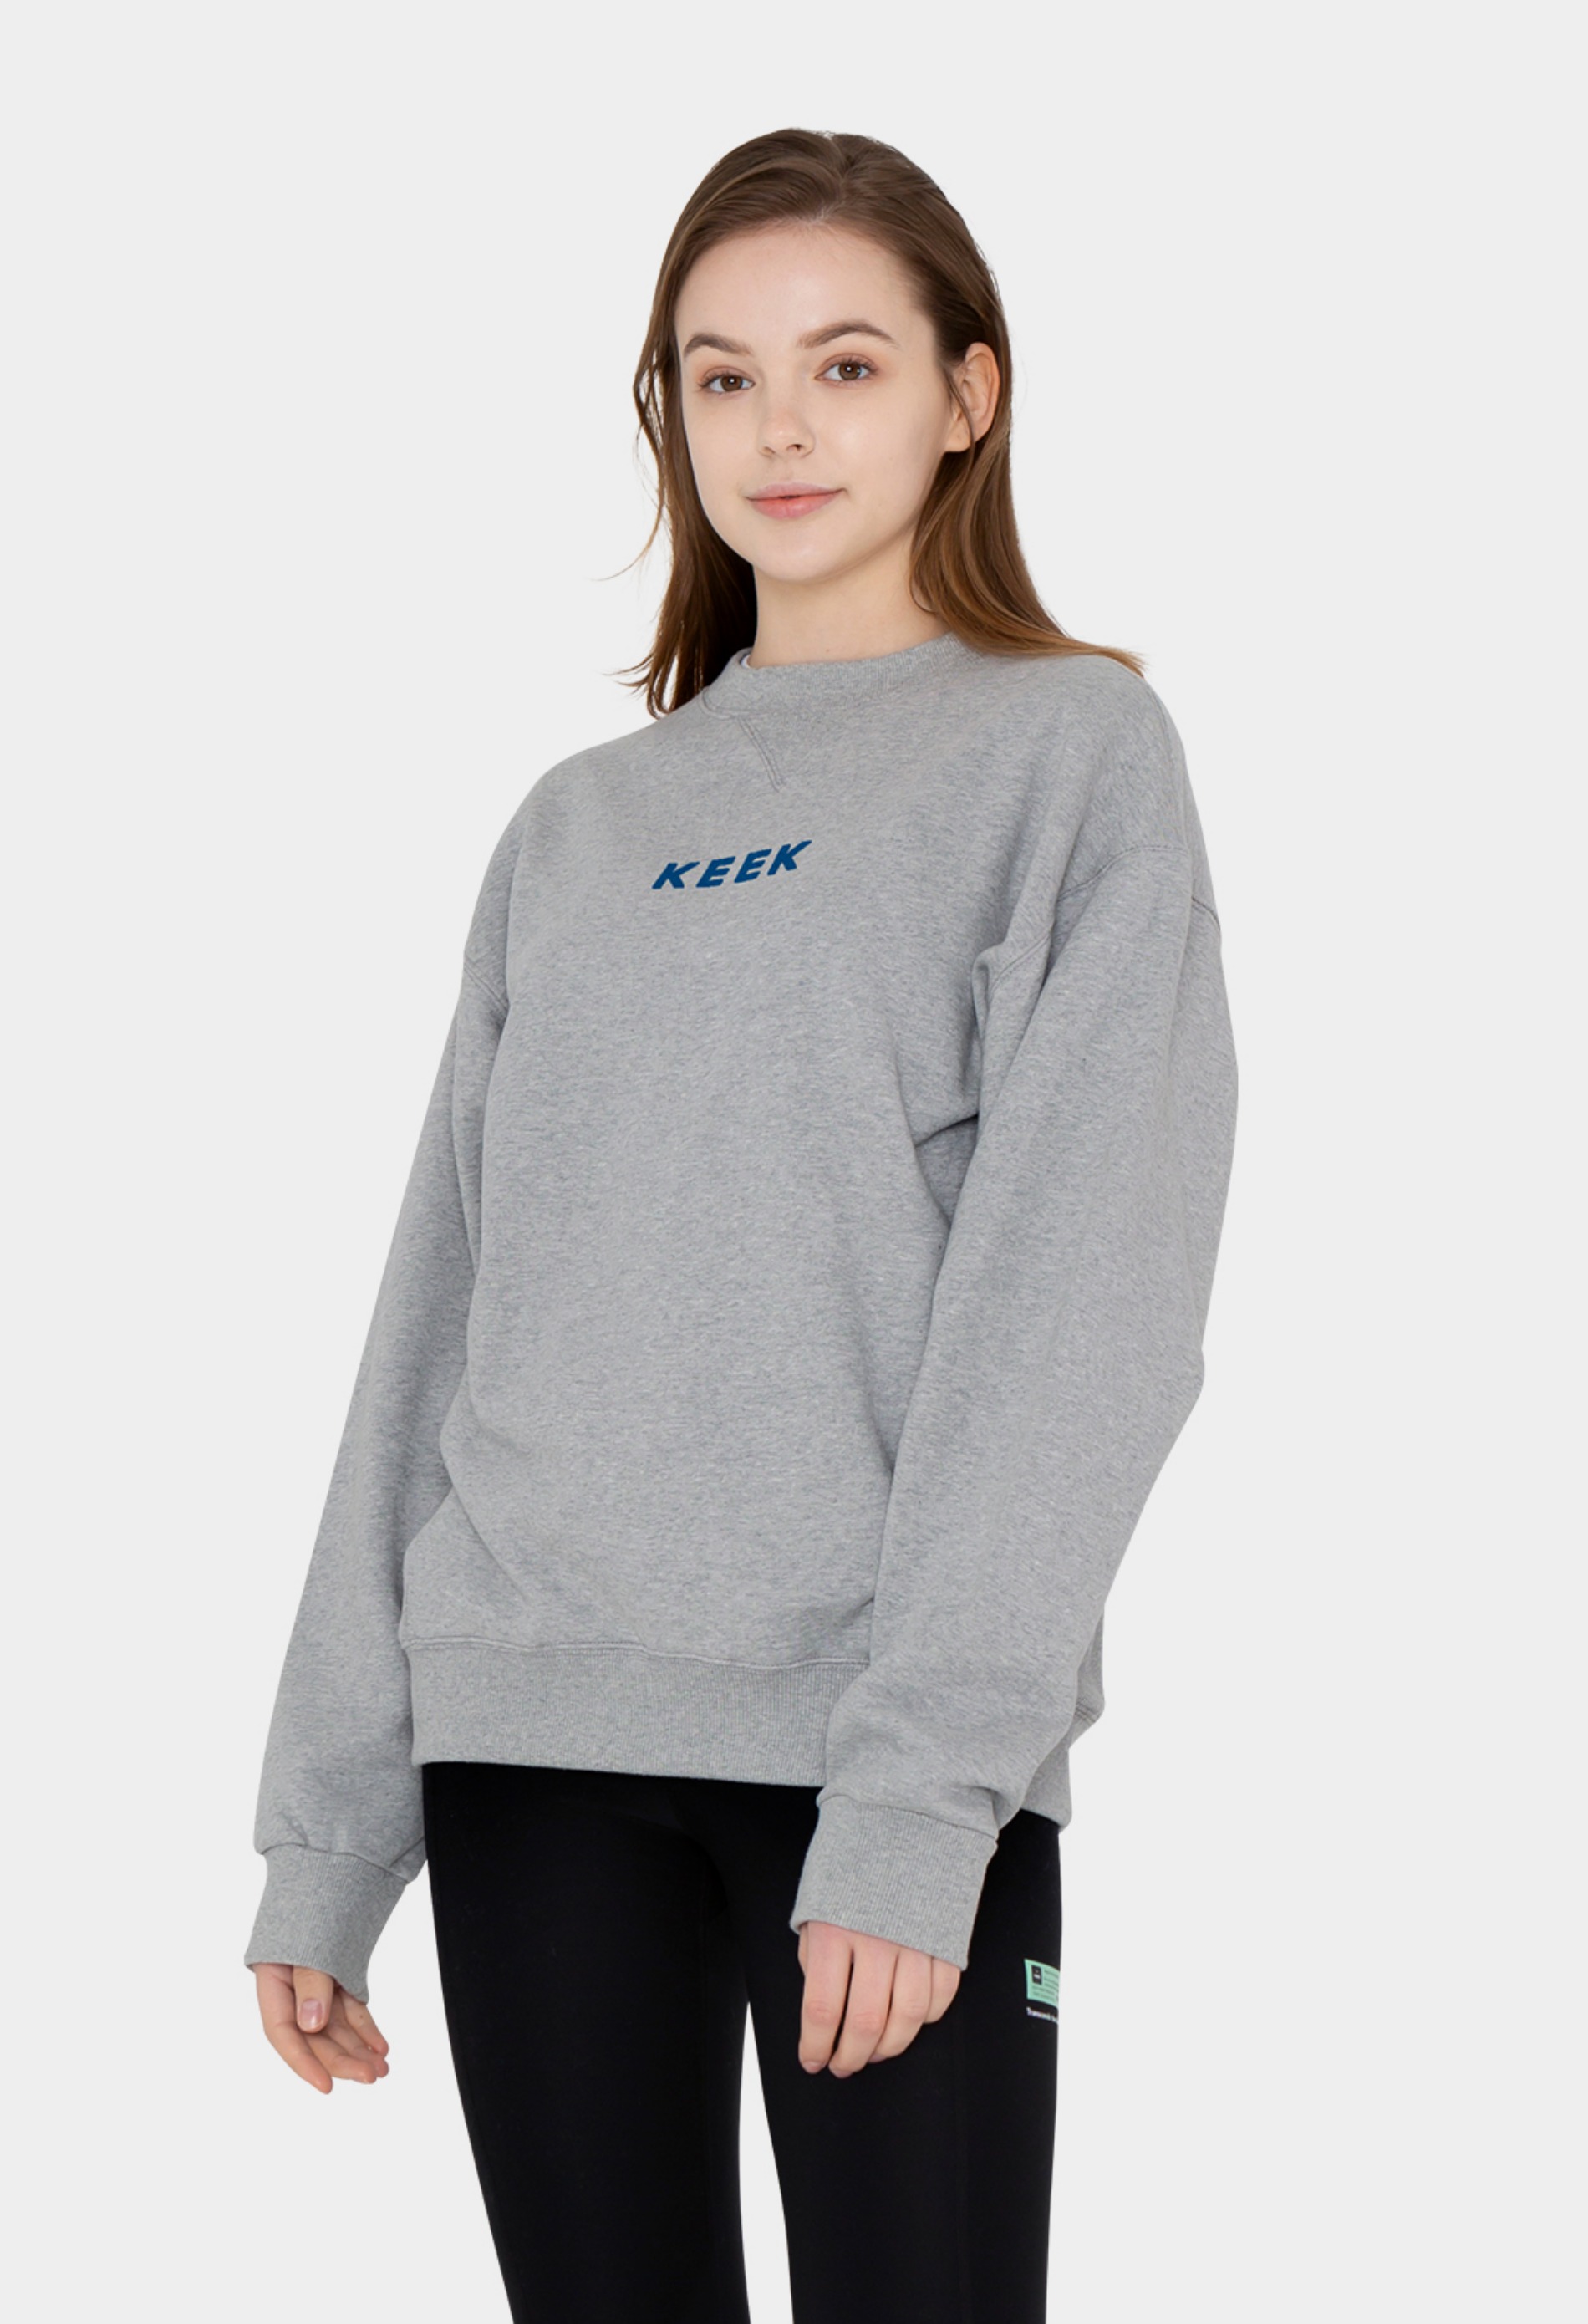 keek [Unisex] Logo Sweatshirts - Melangy Gray 스트릿패션 유니섹스브랜드 커플시밀러룩 남자쇼핑몰 여성의류쇼핑몰 후드티 힙색